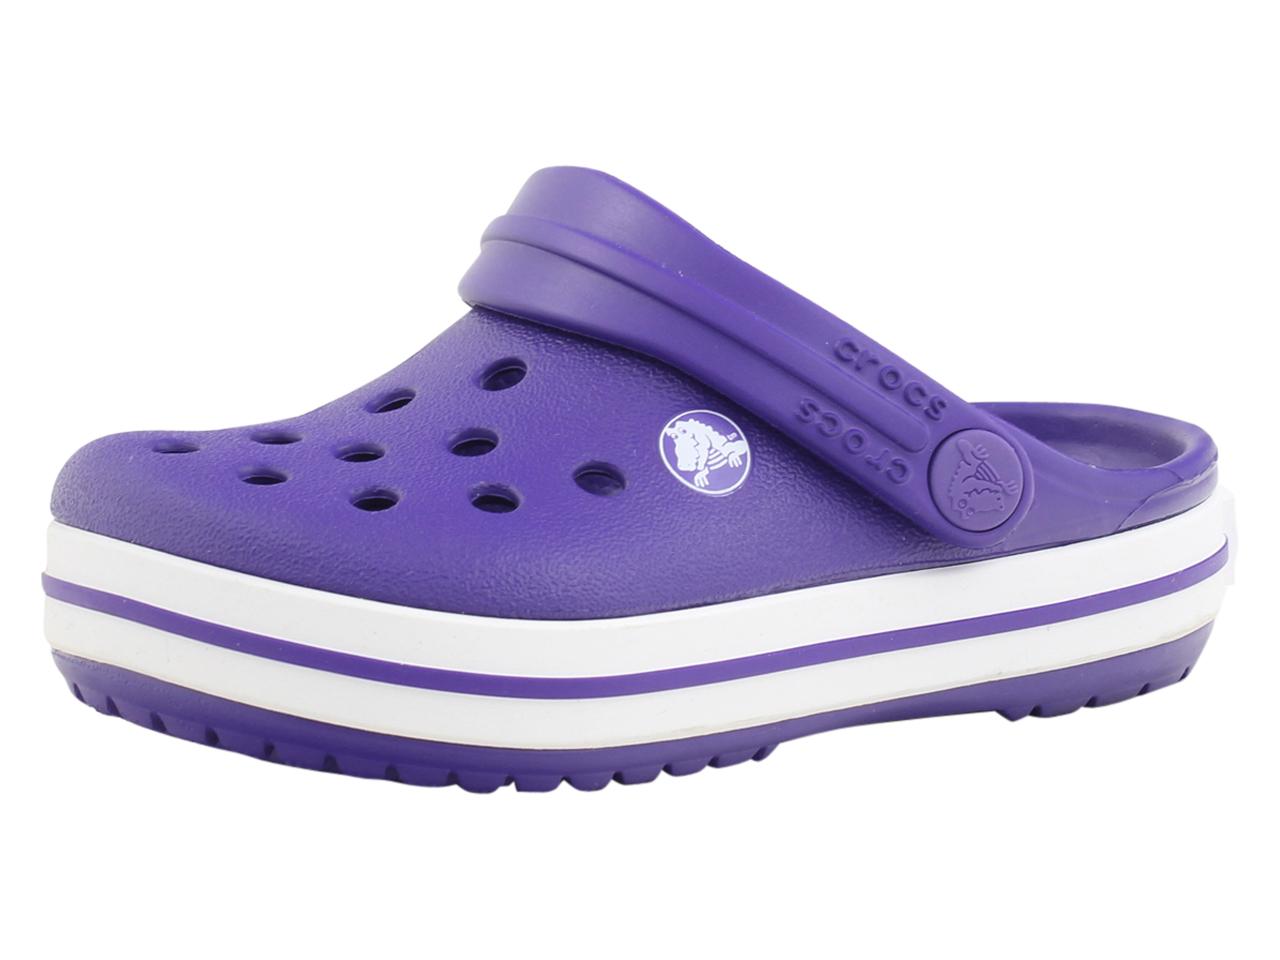 Crocs Toddler/Little Kid's Crocband Clogs Sandals Shoes - Ultraviolet/White - 11 M US Little Kid